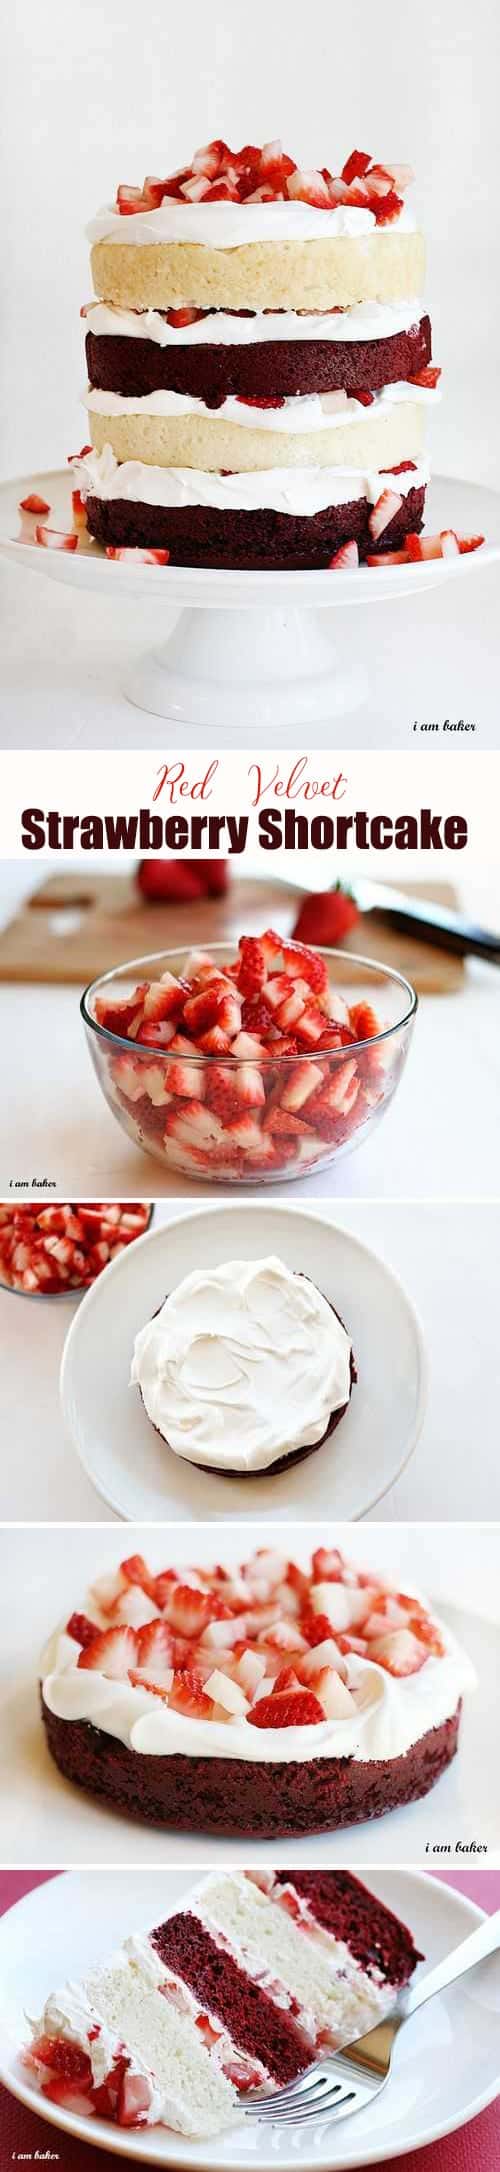 This puts regular strawberry shortcake to shame!